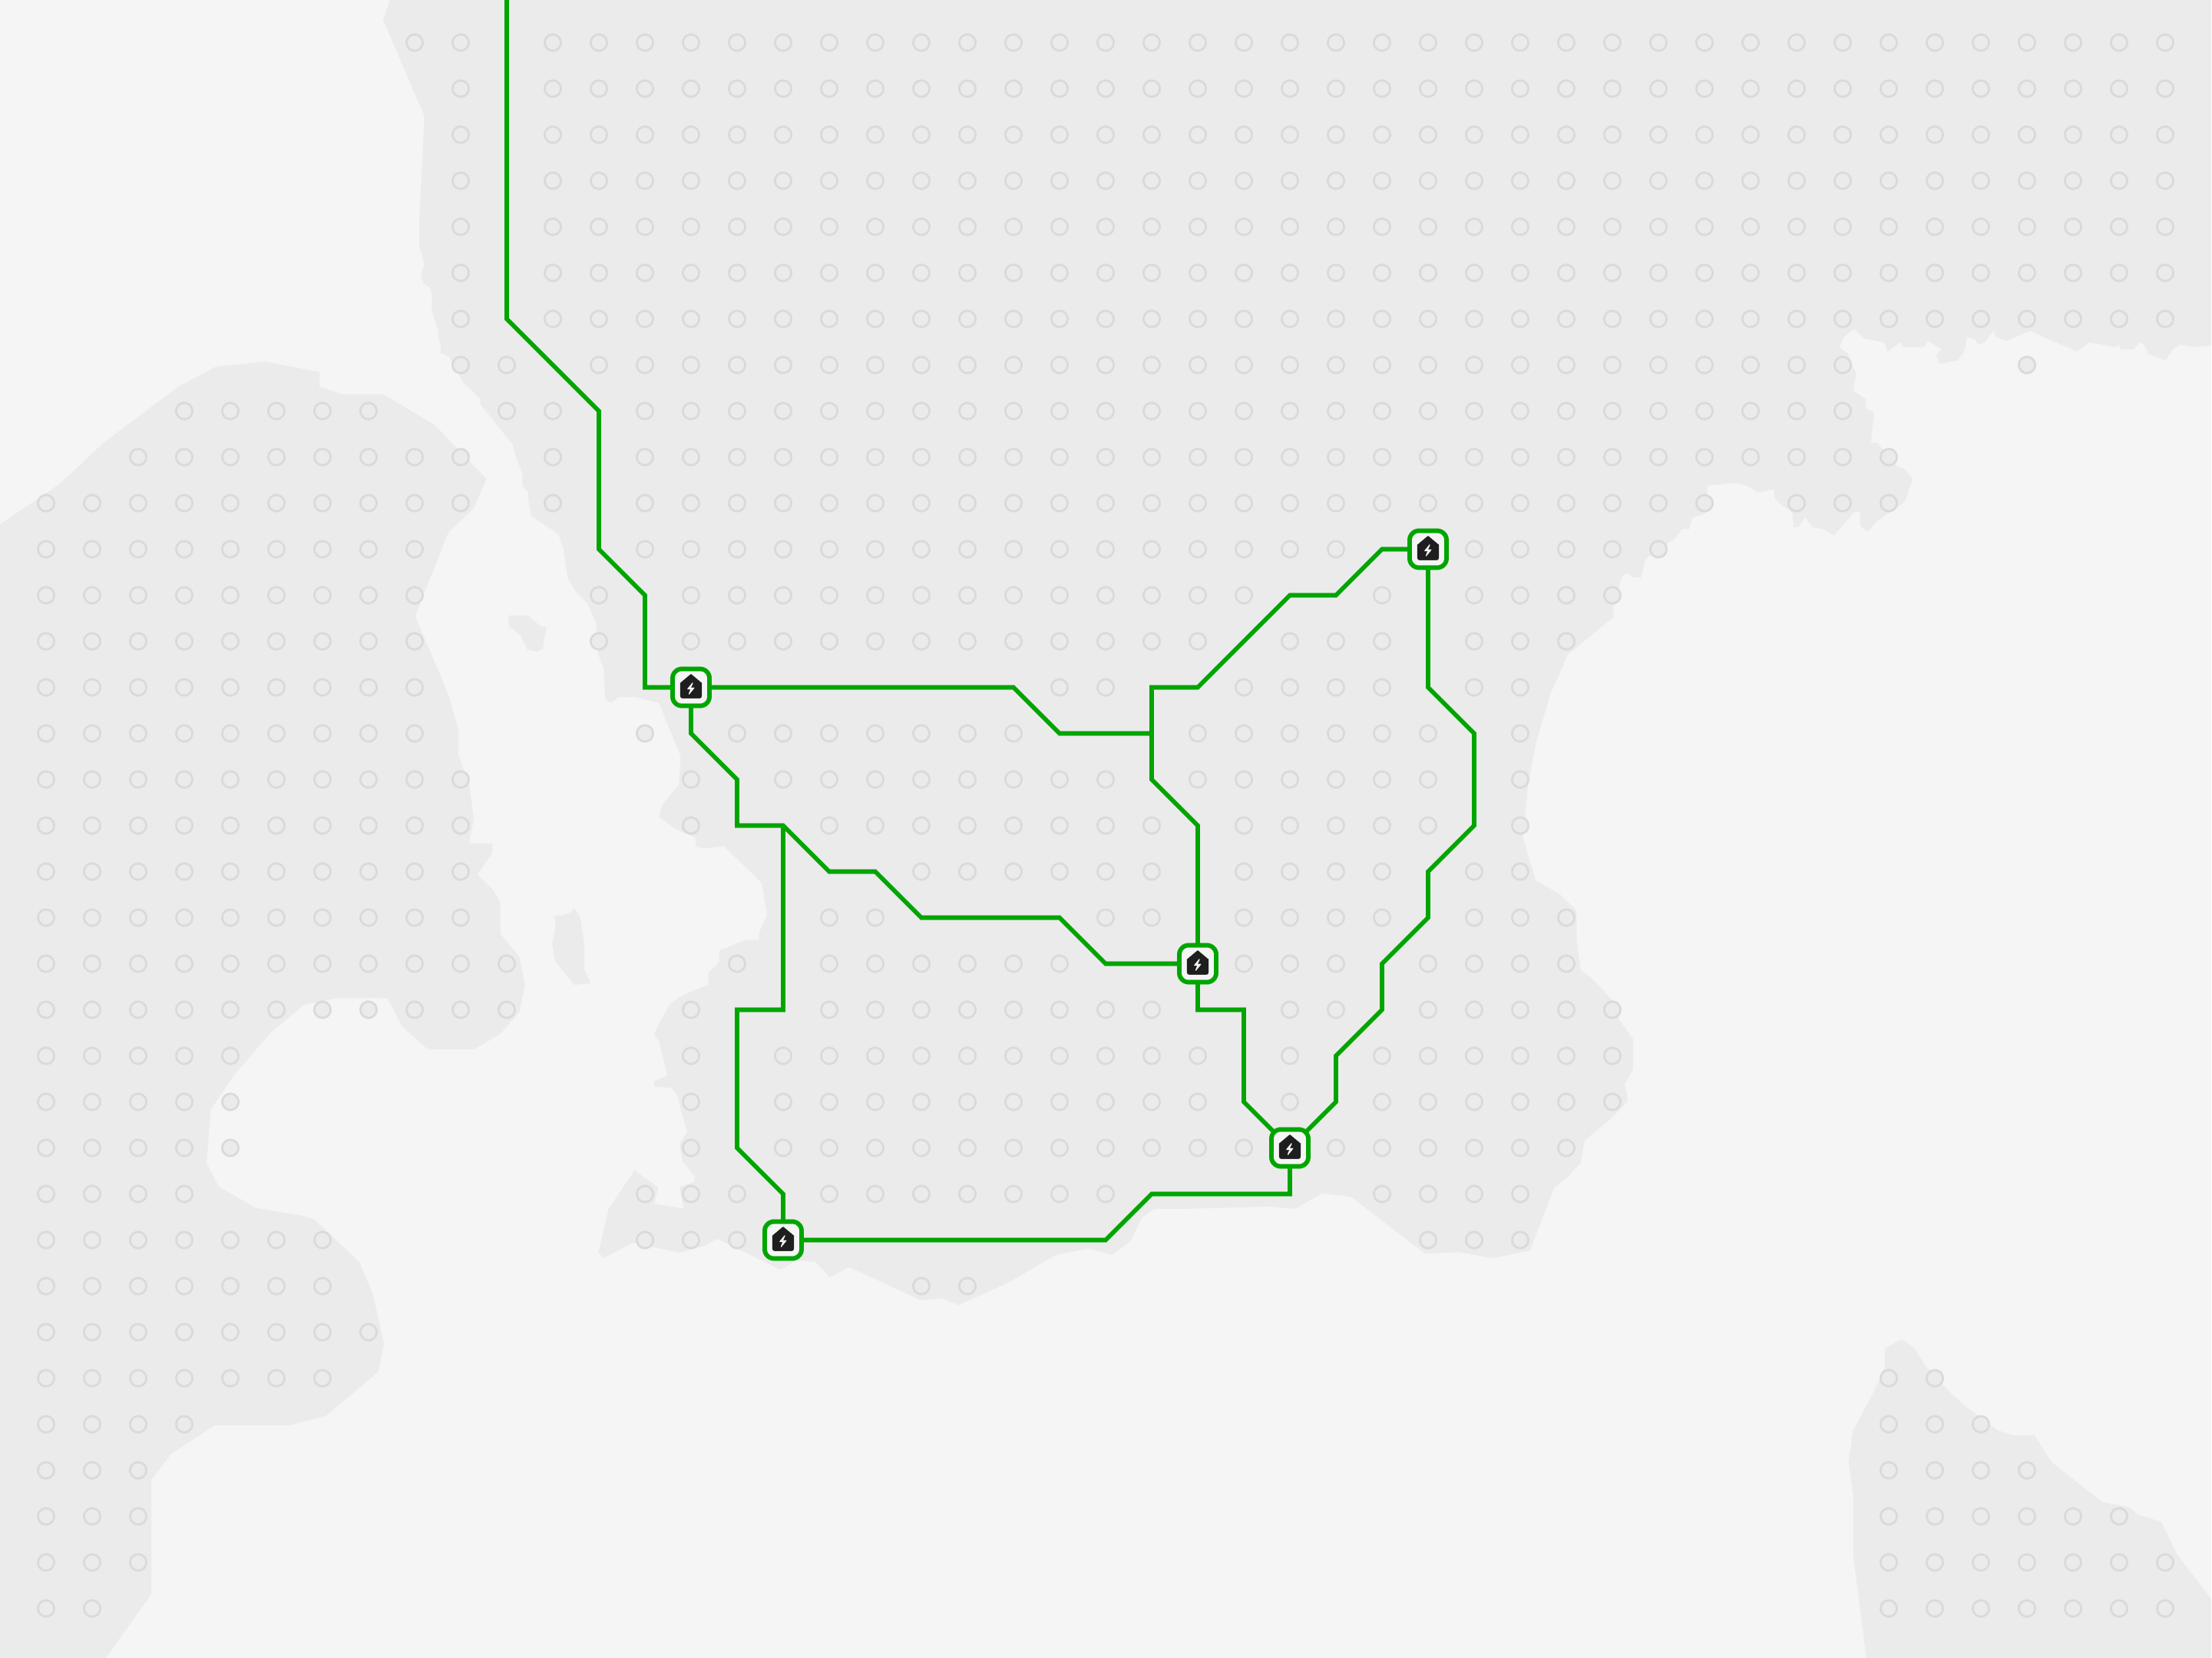 Illustration of the Einride grid in Southern Sweden